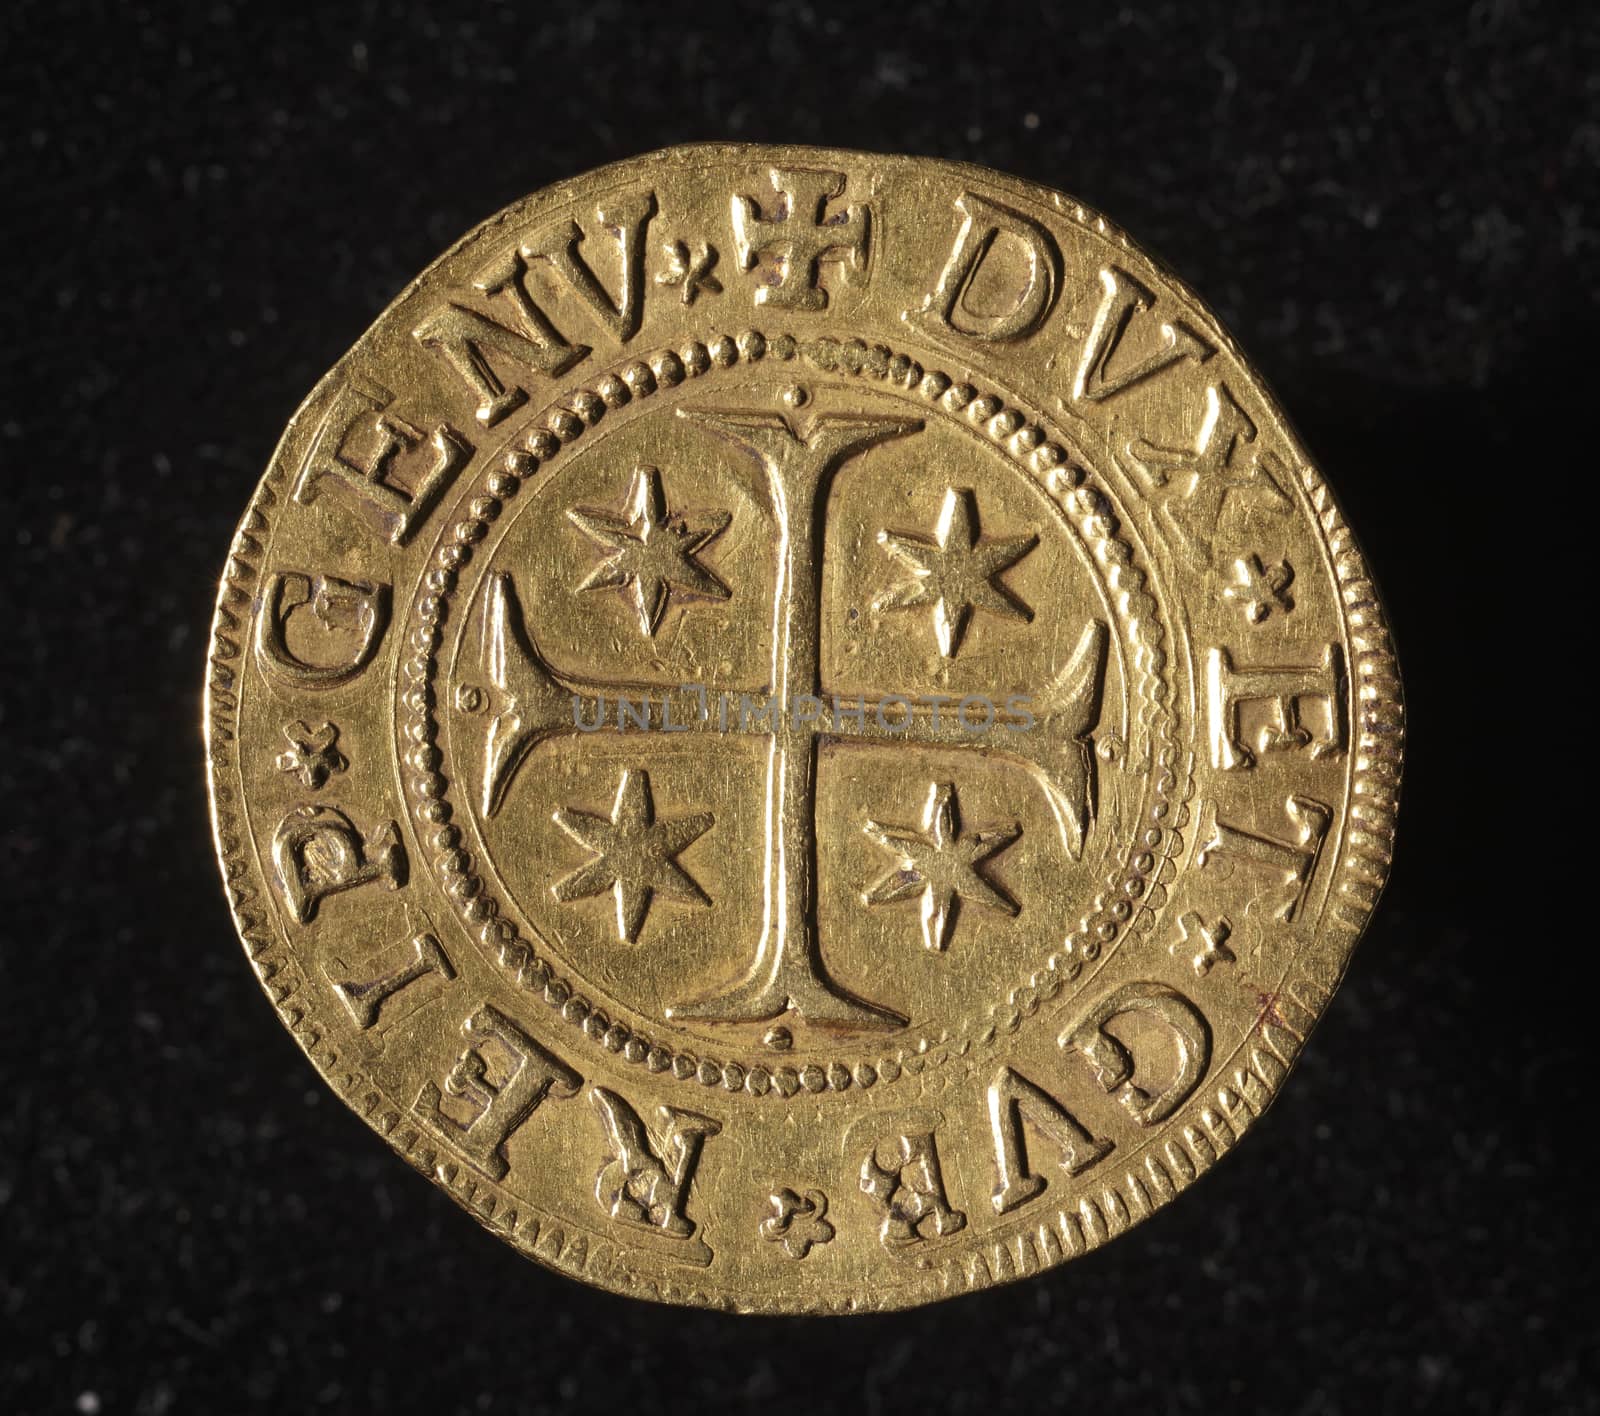 5 doppie - recto ID005 - ancient golden coin of republic of genoa italy